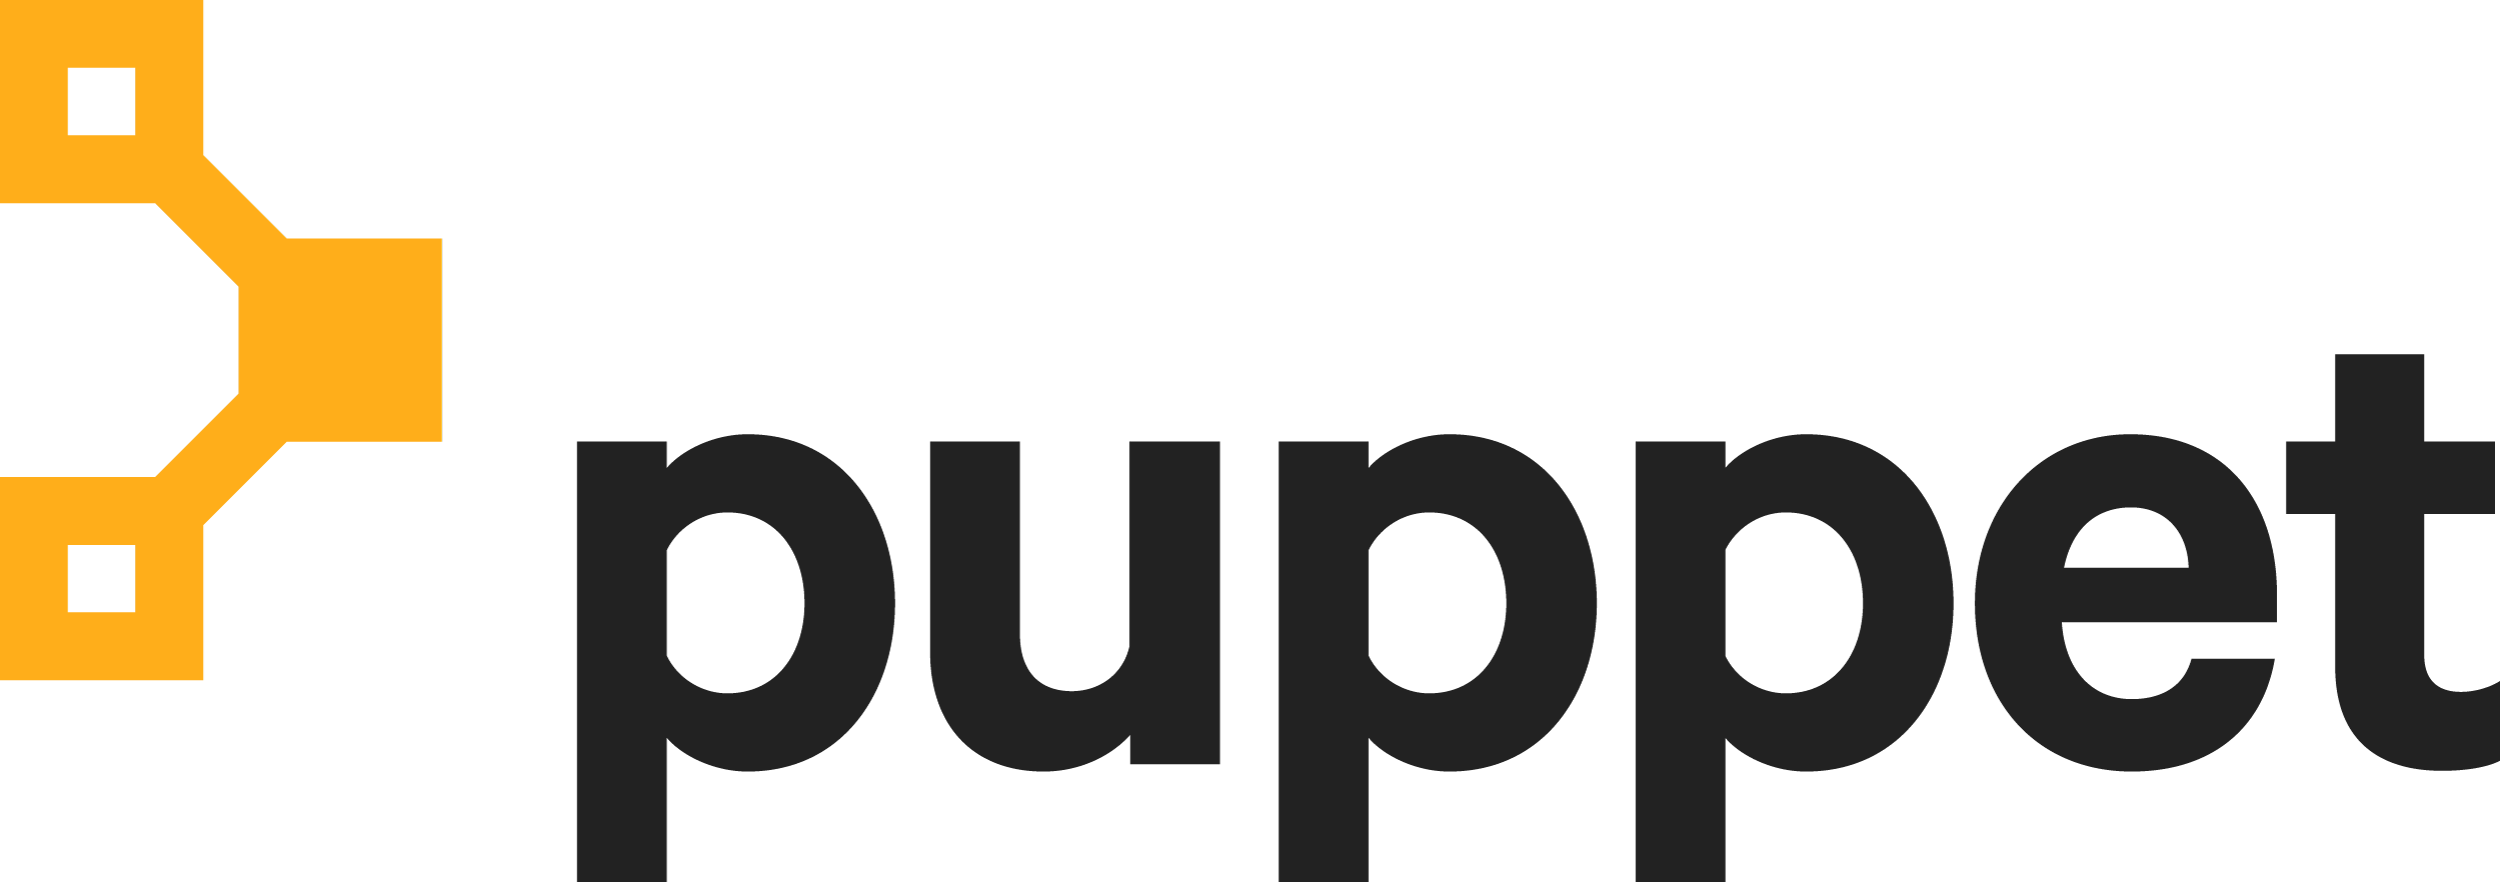 Puppet-Logo-Amber-Black-lg (2).png